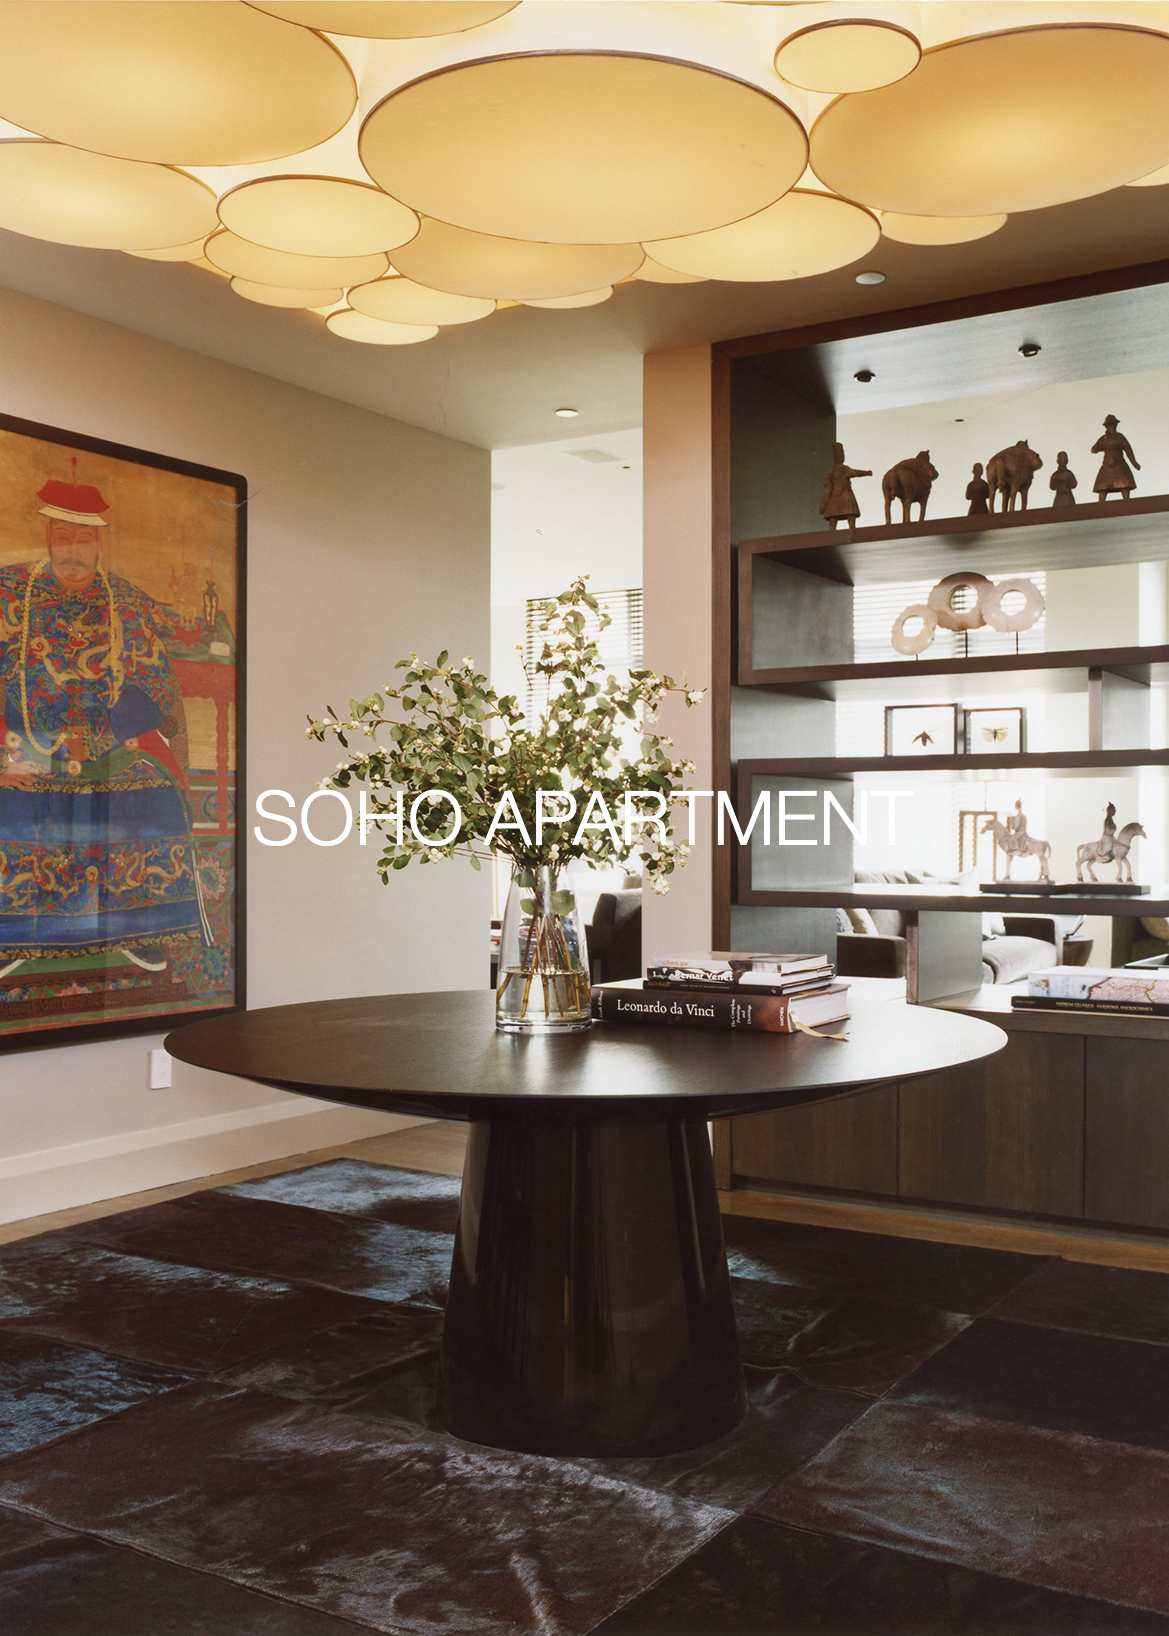 Soho Apartment.jpg